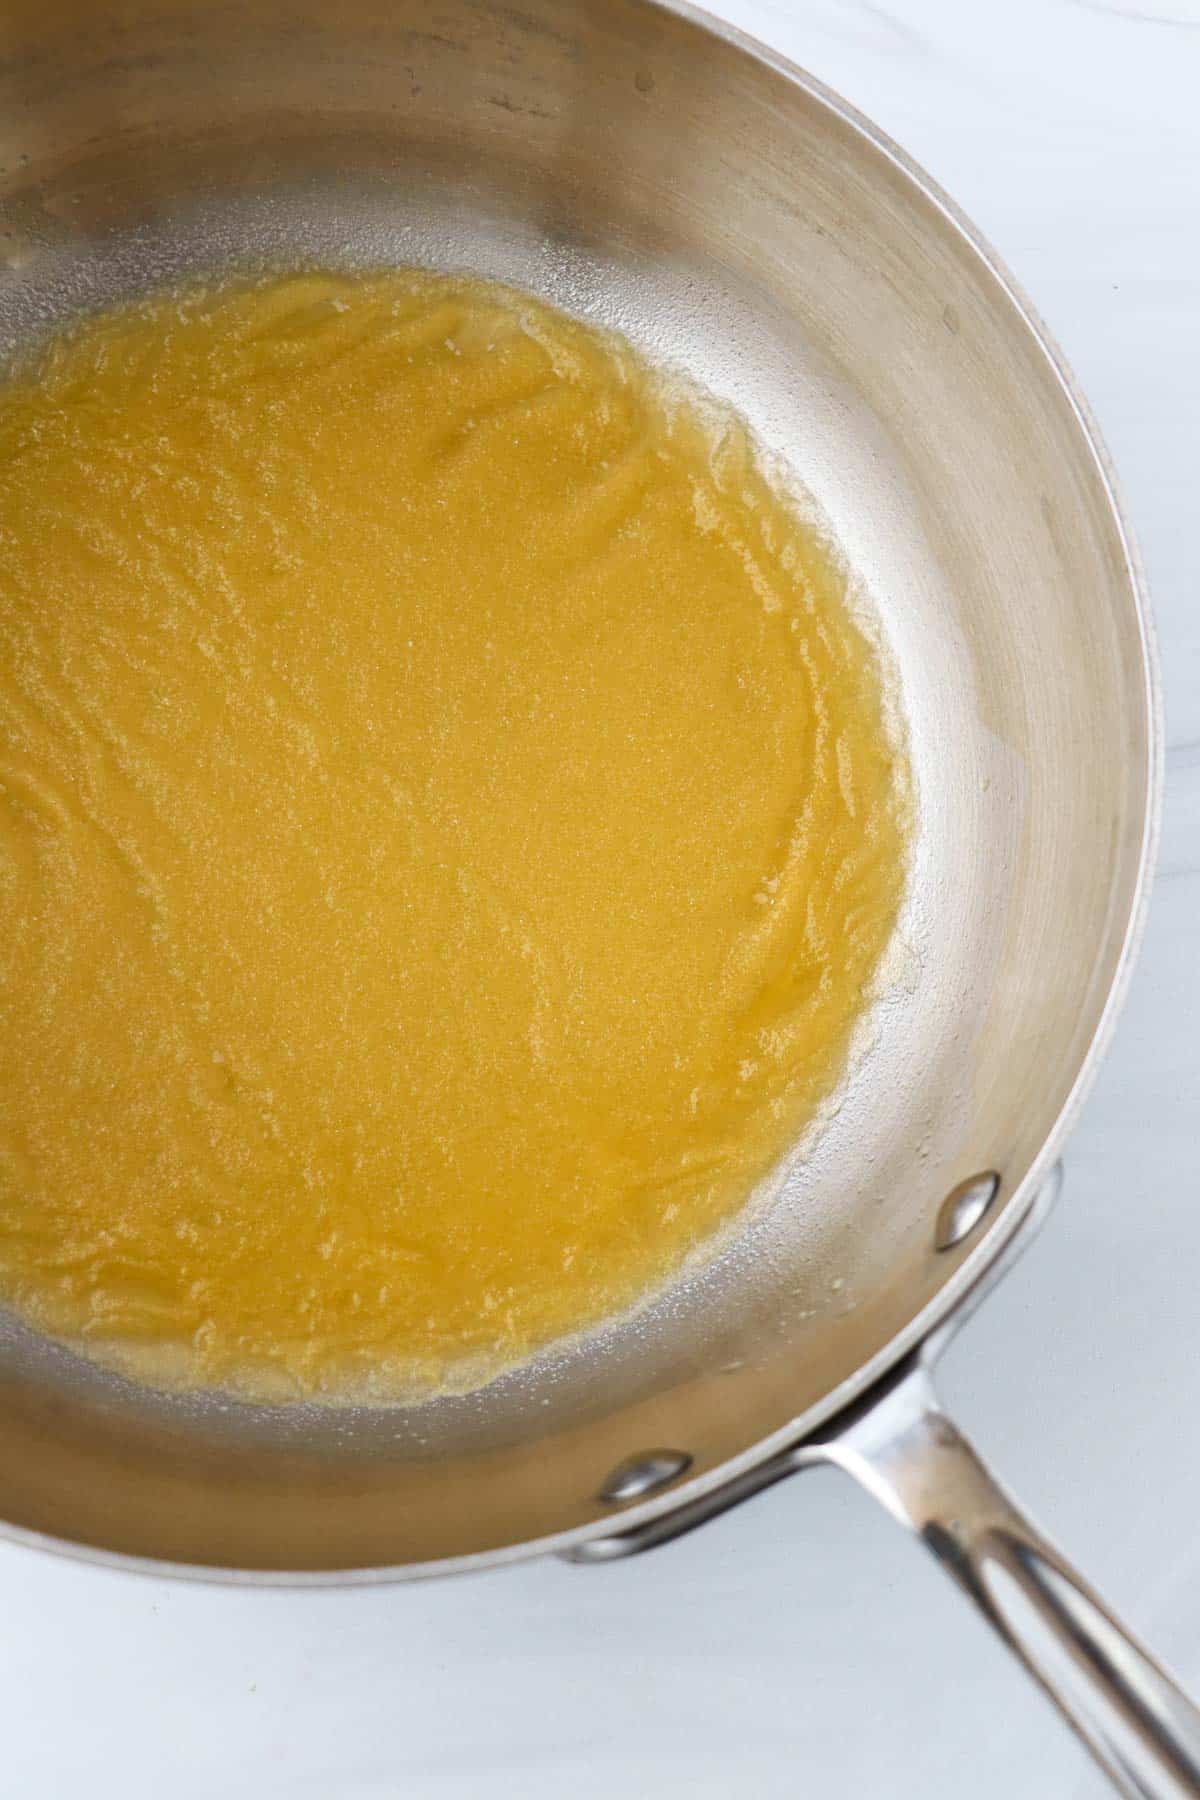 Orange juice and gelatin in a saucepan.